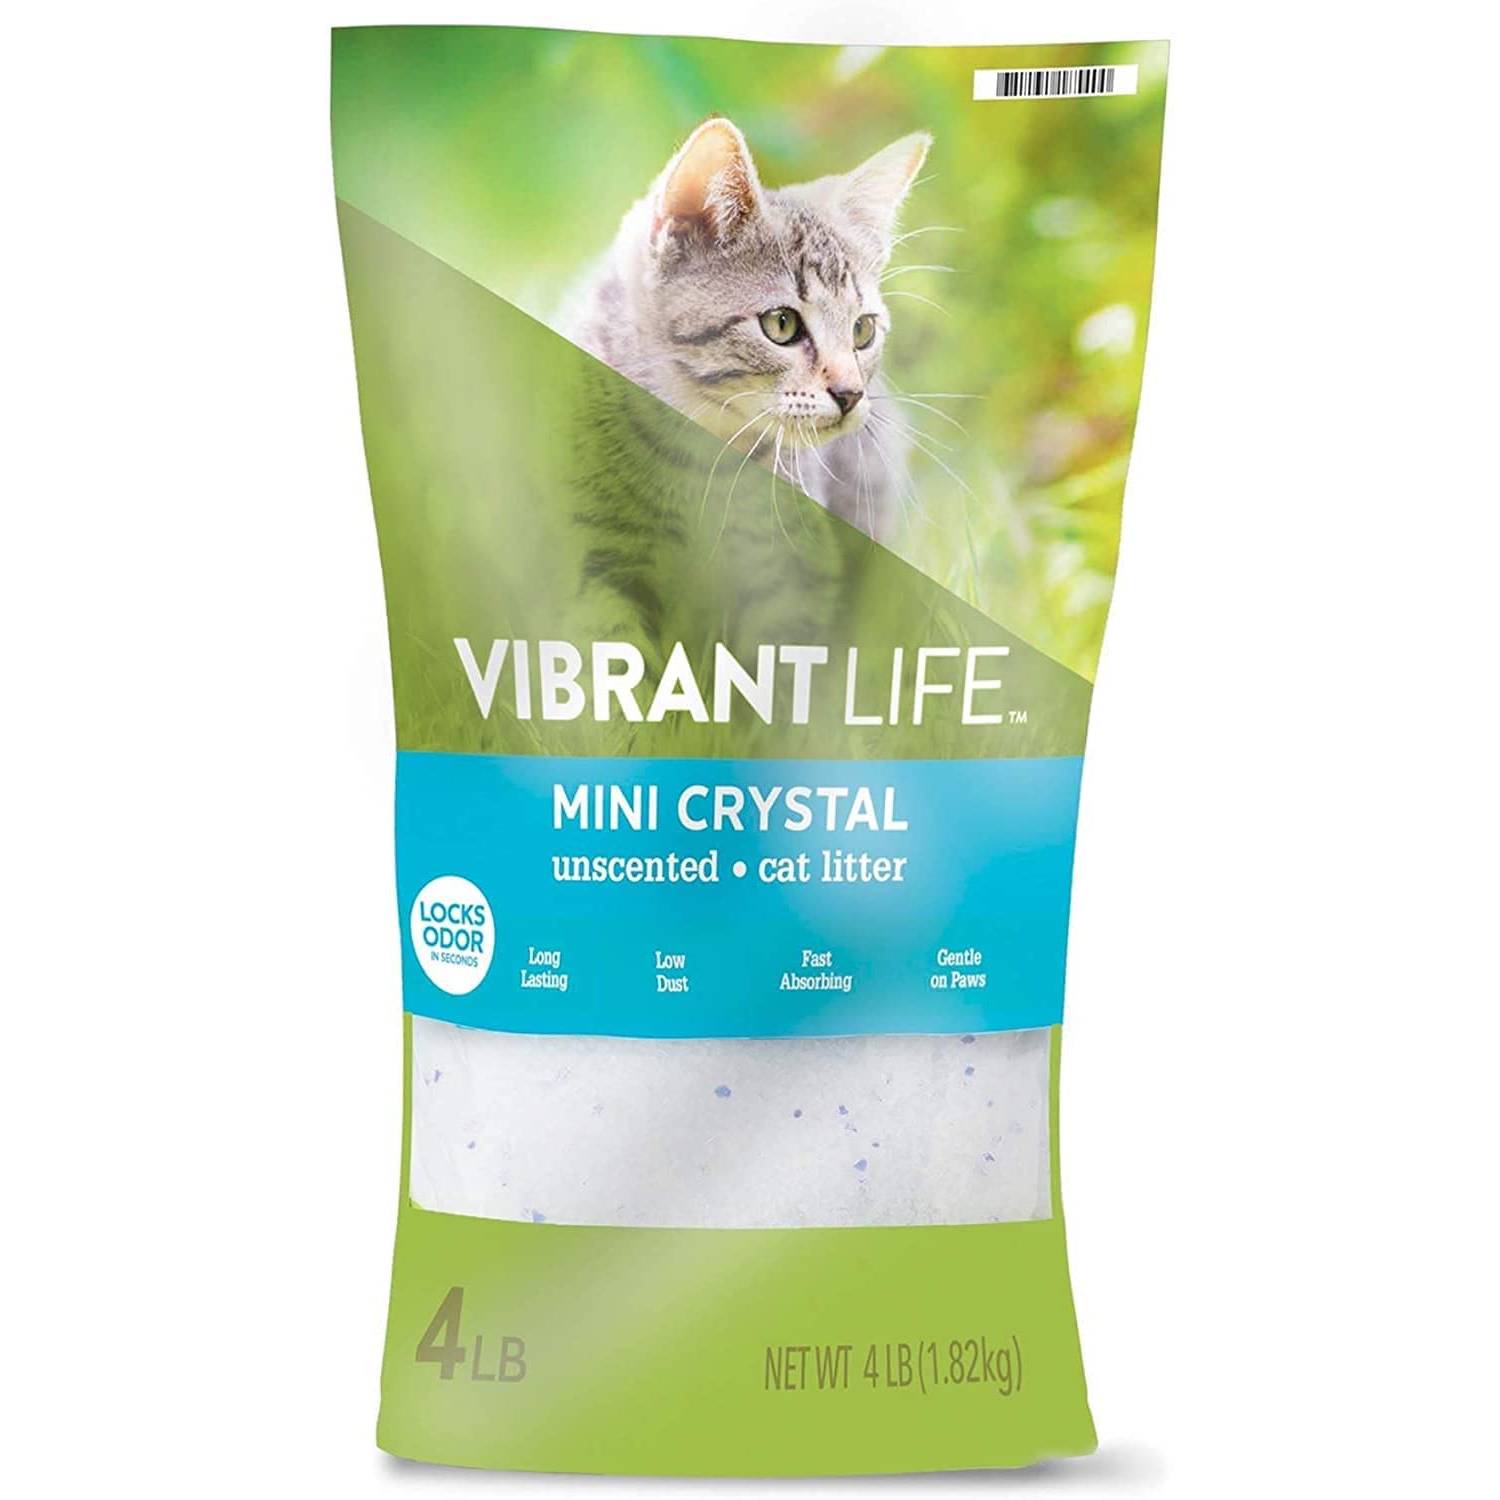 Vibrant Life Cat Litter Reviews